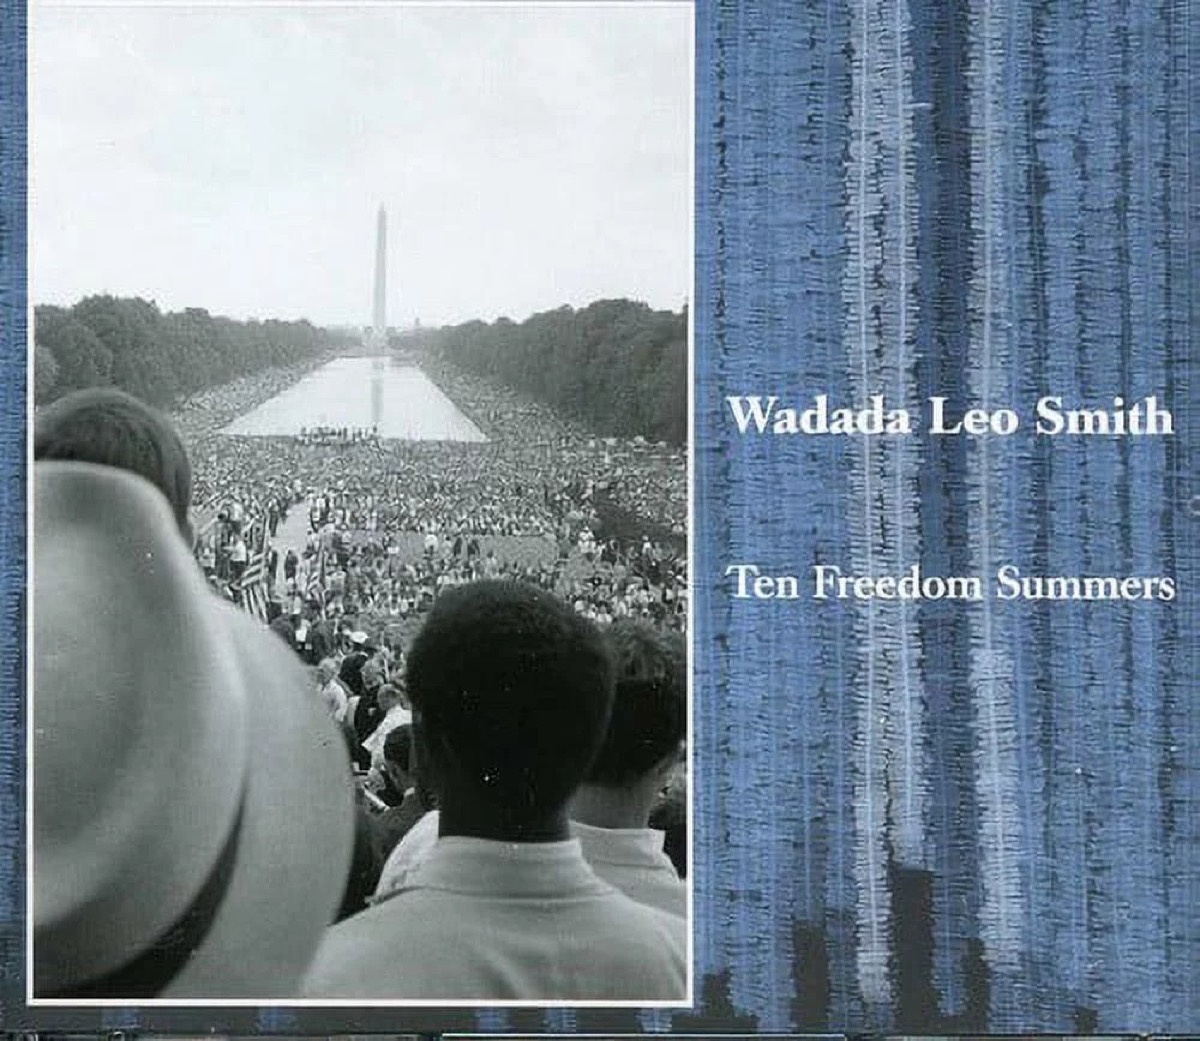 "Ten Freedom Summers" by Wadada Leo Smith